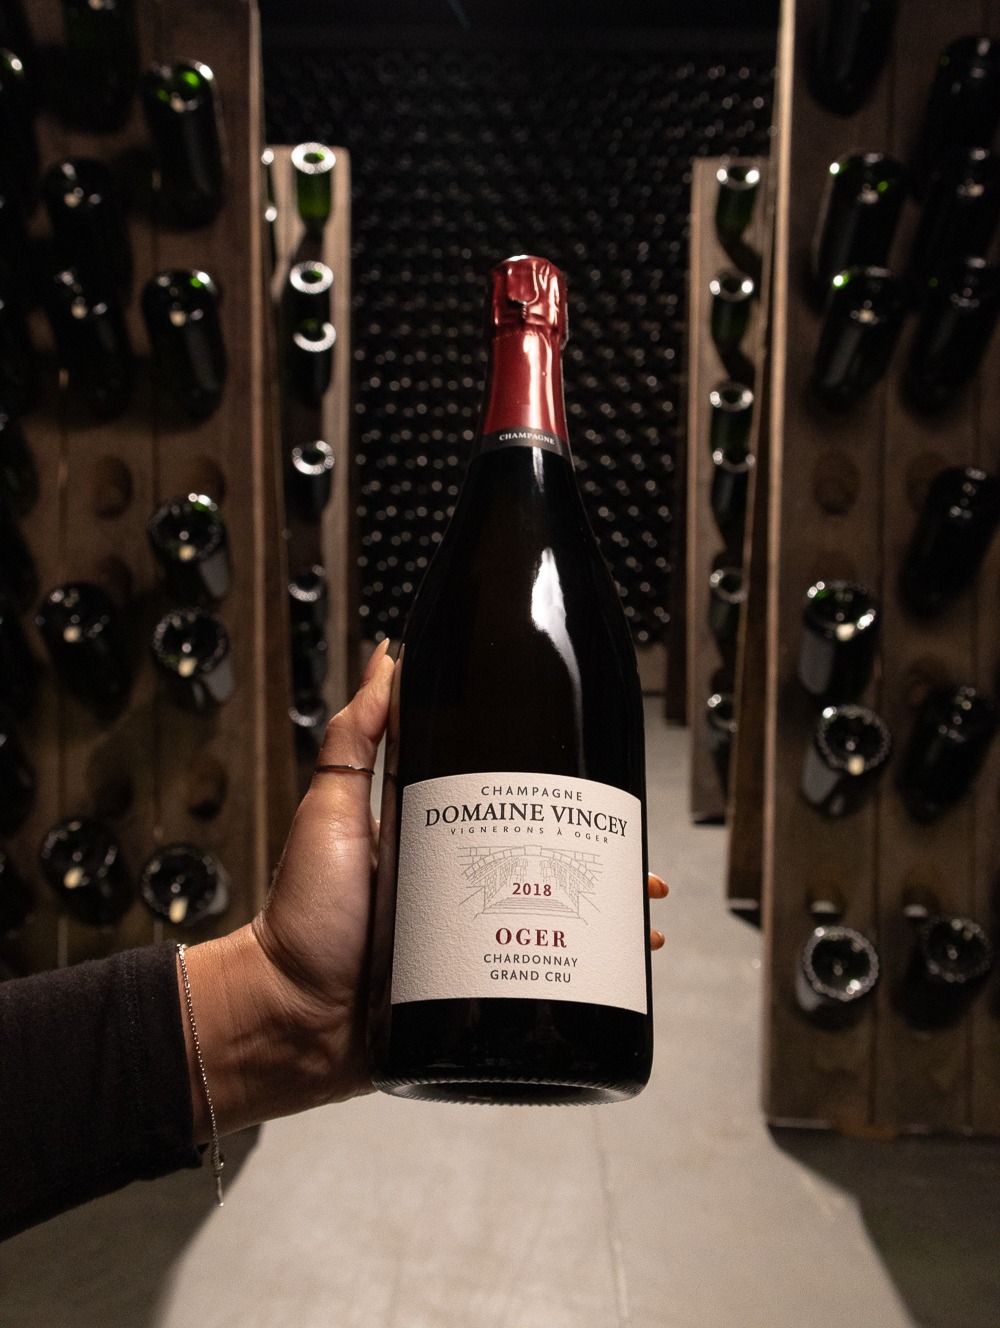 Champagne Domaine Vincey Chardonnay Oger Brut Nature Grand Cru 2018